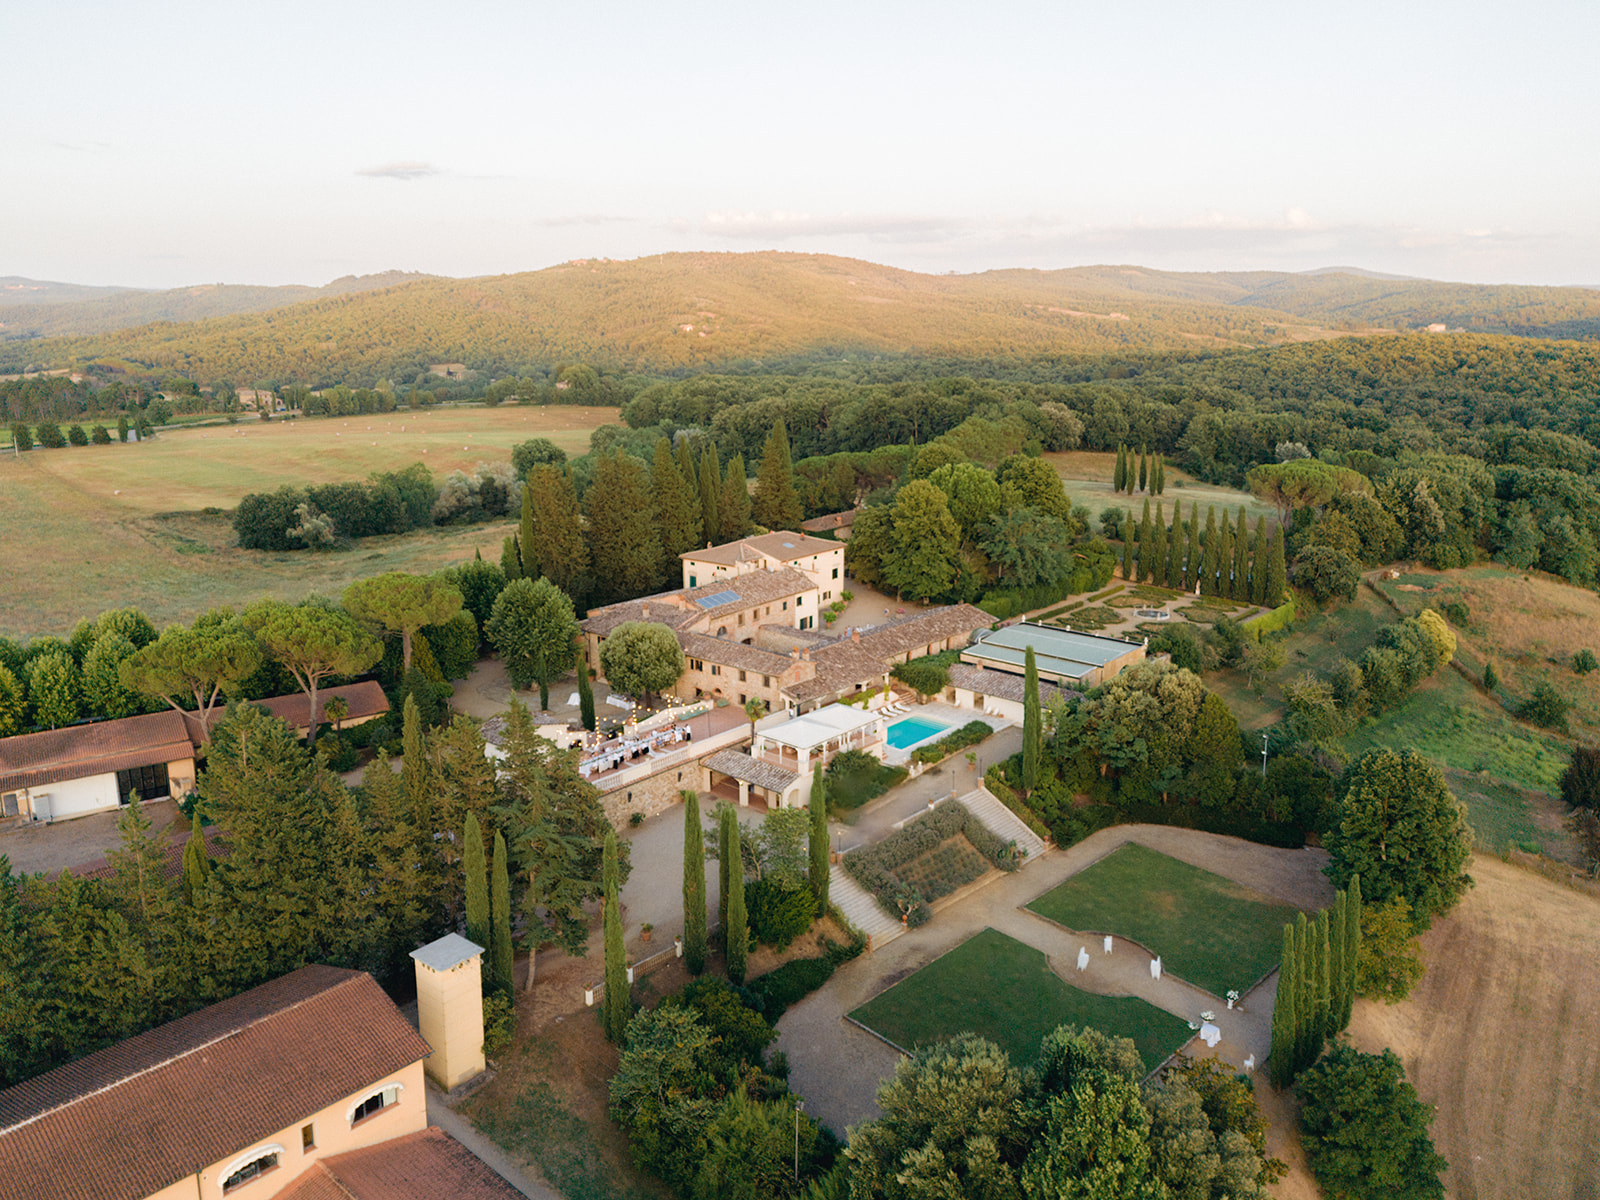 Drone shot of Villa la Selva Wine Resort and its spaces